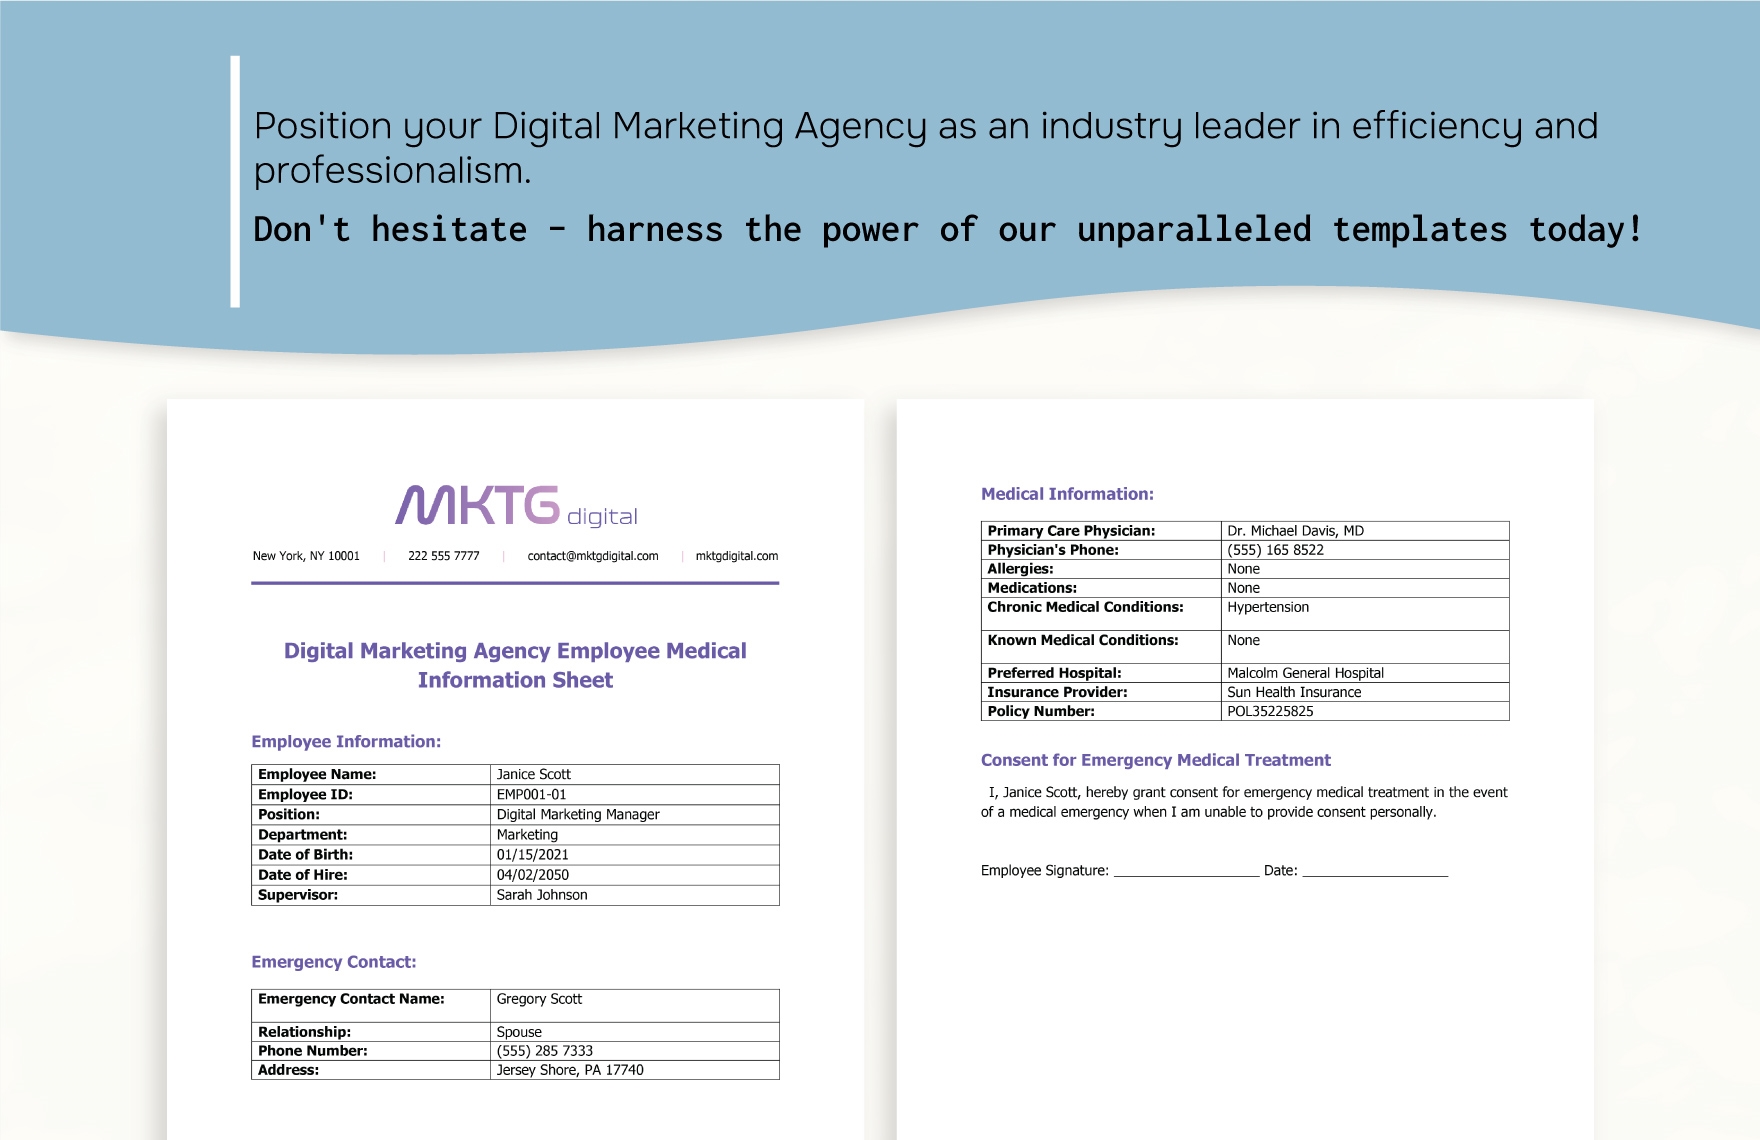 Digital Marketing Agency Employee Medical Information Sheet Template